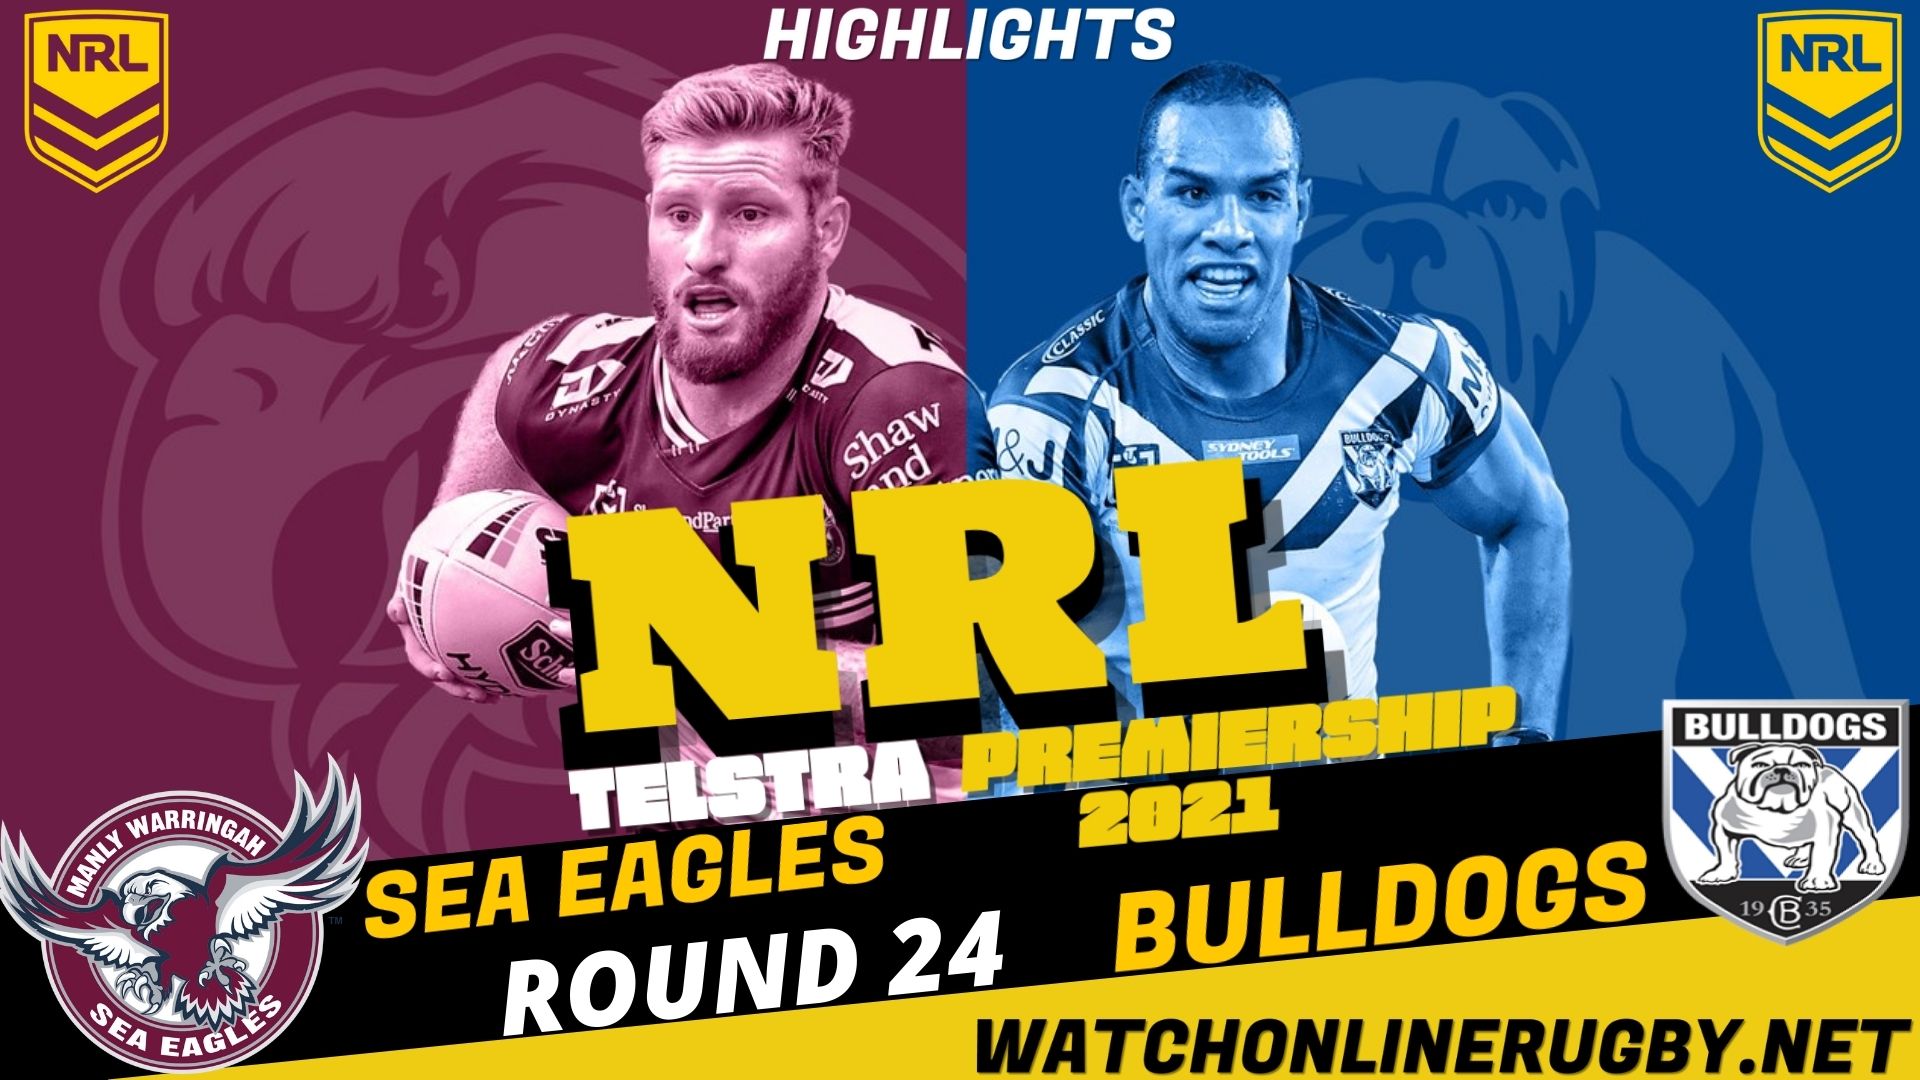 Sea Eagles Vs Bulldogs Highlights RD 24 NRL Rugby